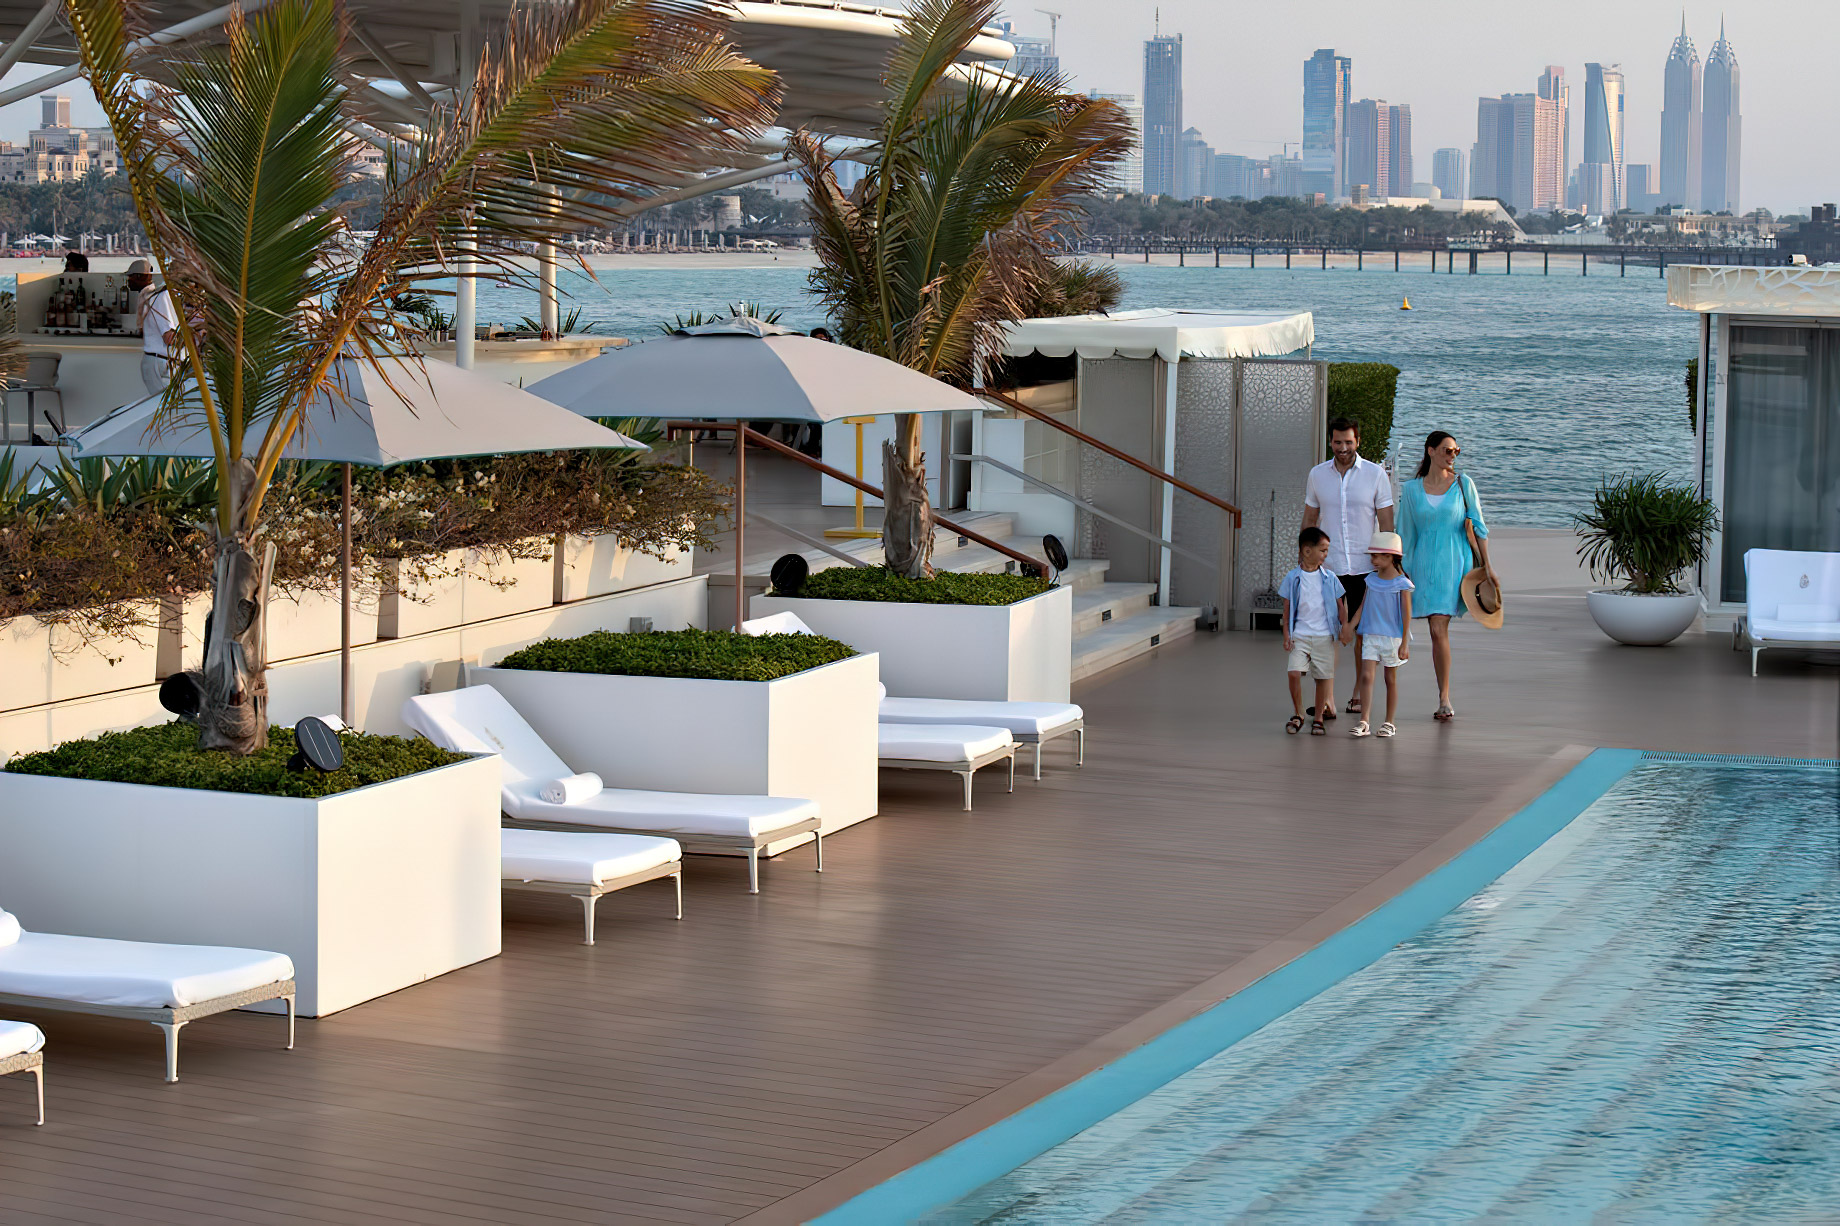 Burj Al Arab Jumeirah Hotel – Dubai, UAE – Burj Al Arab Terrace Poolside